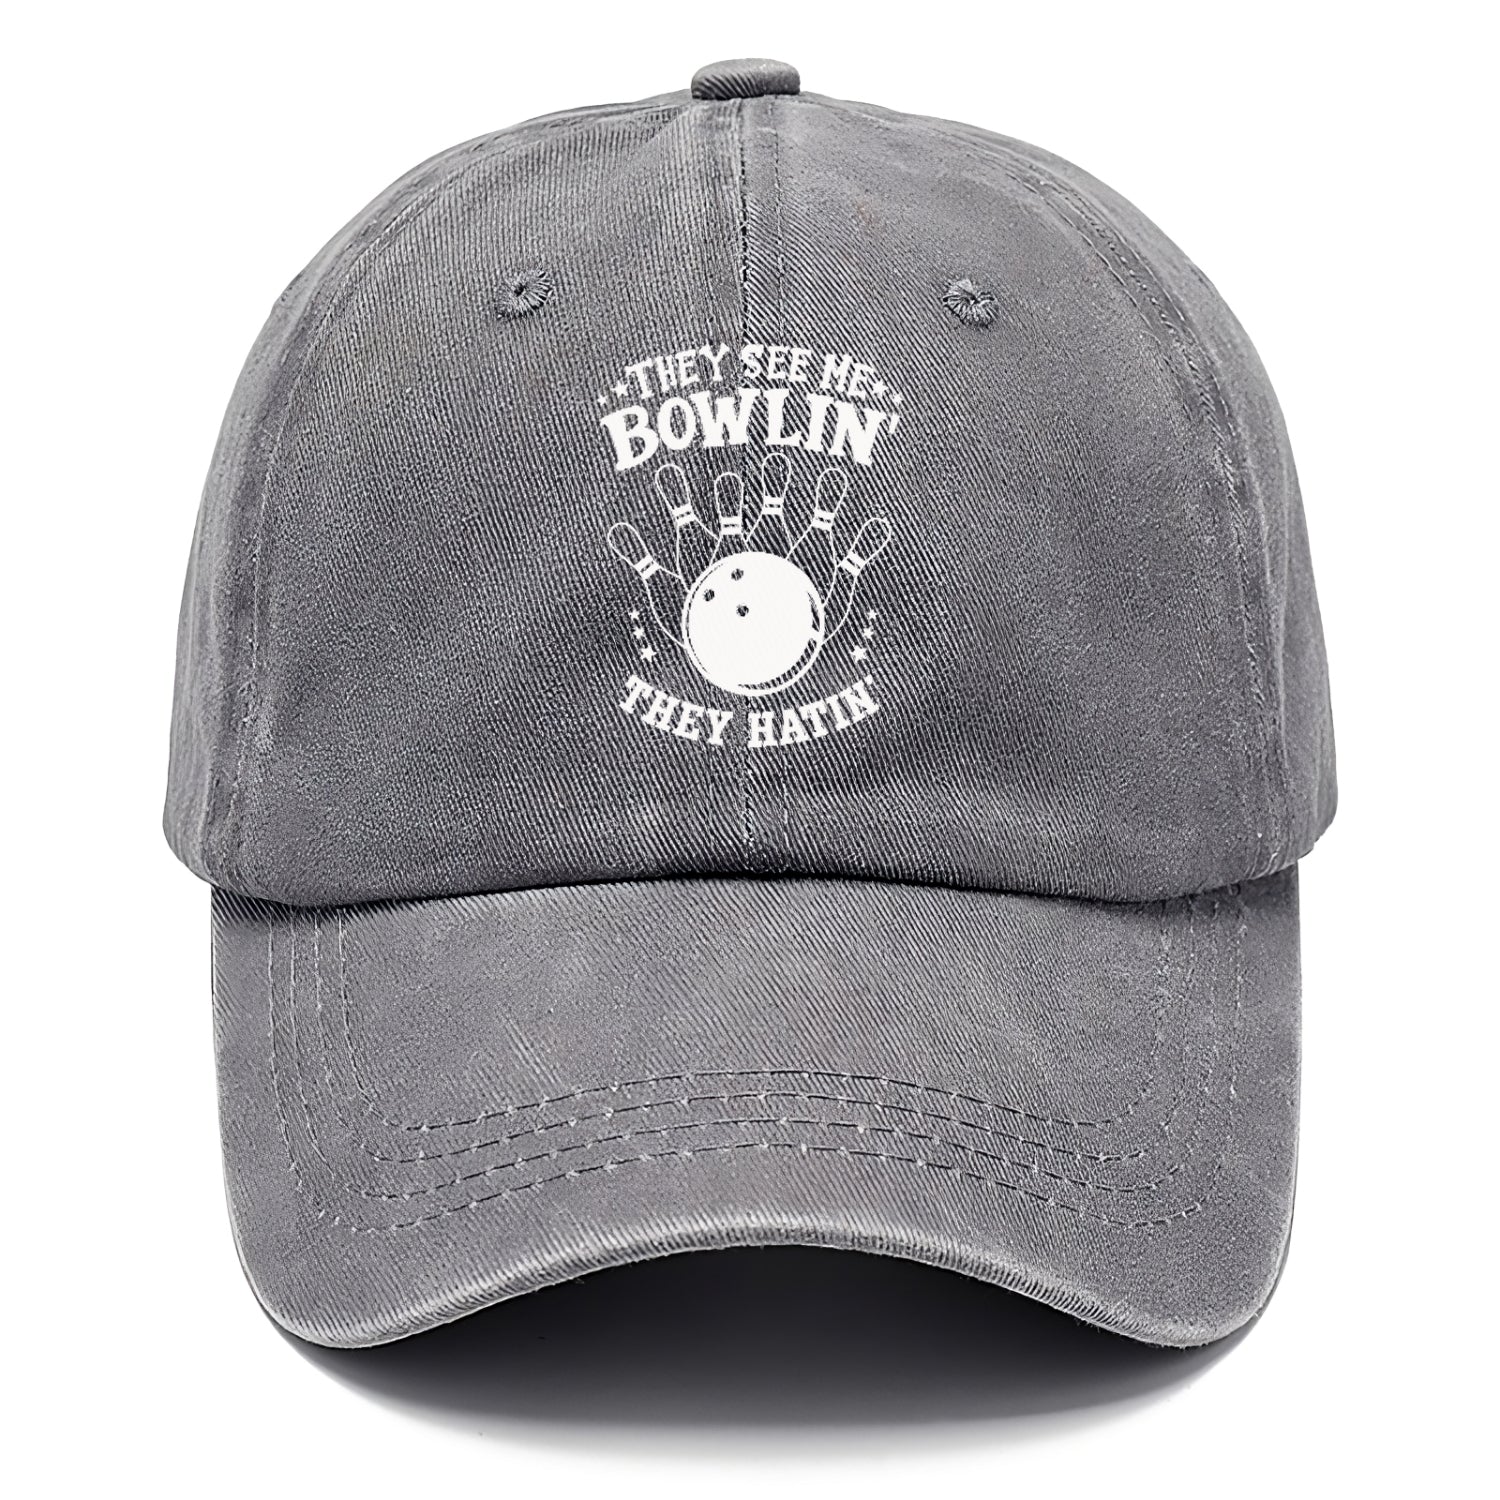 Rollin' Strikes: Unleash Your Bowling Spirit Hat